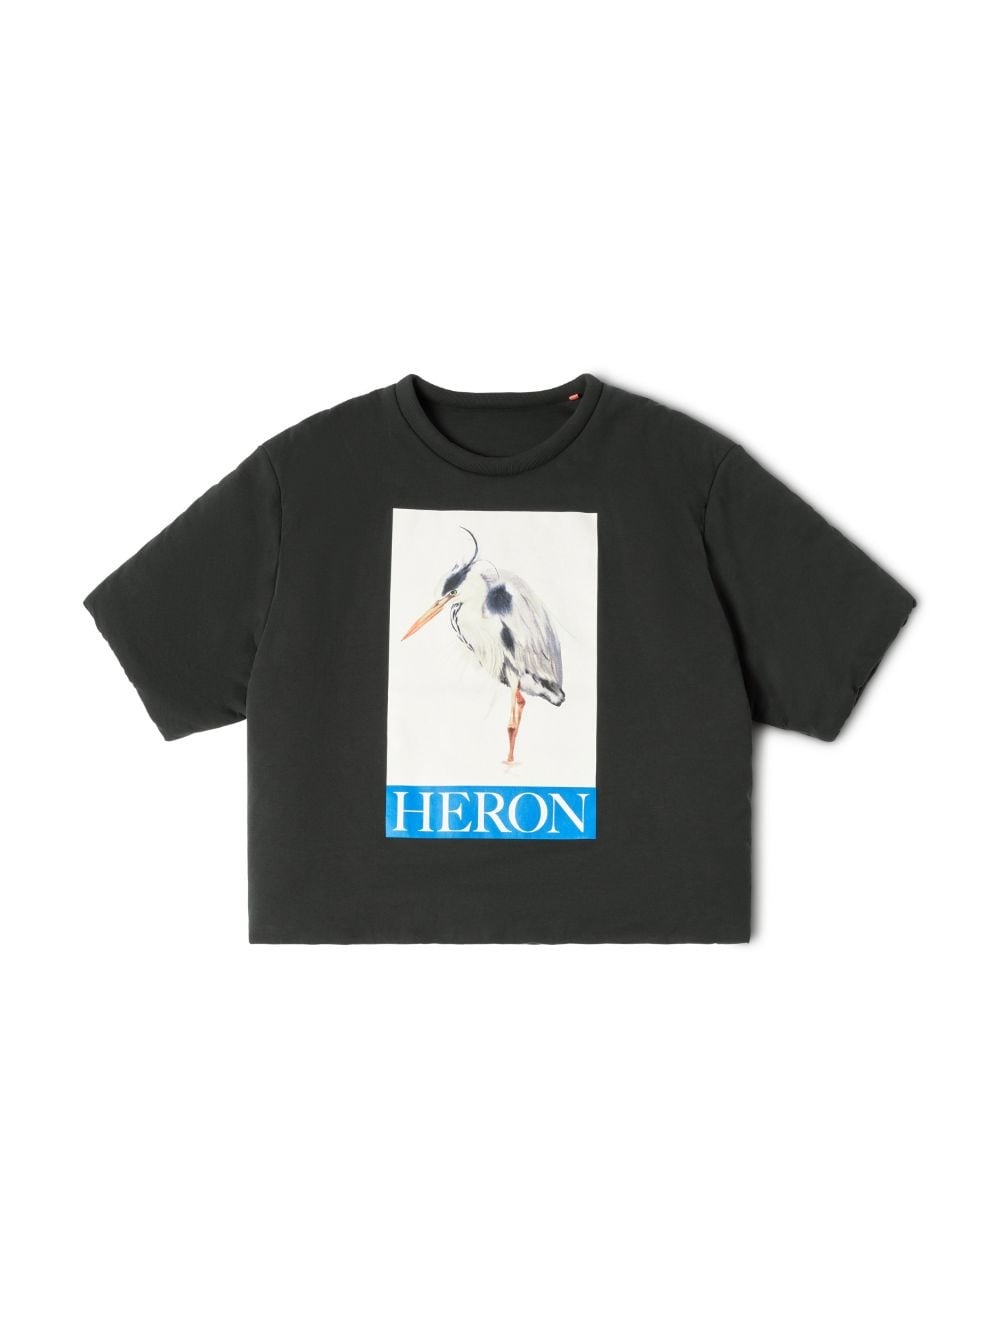 Heron Bird Painted Padded Tee - 1